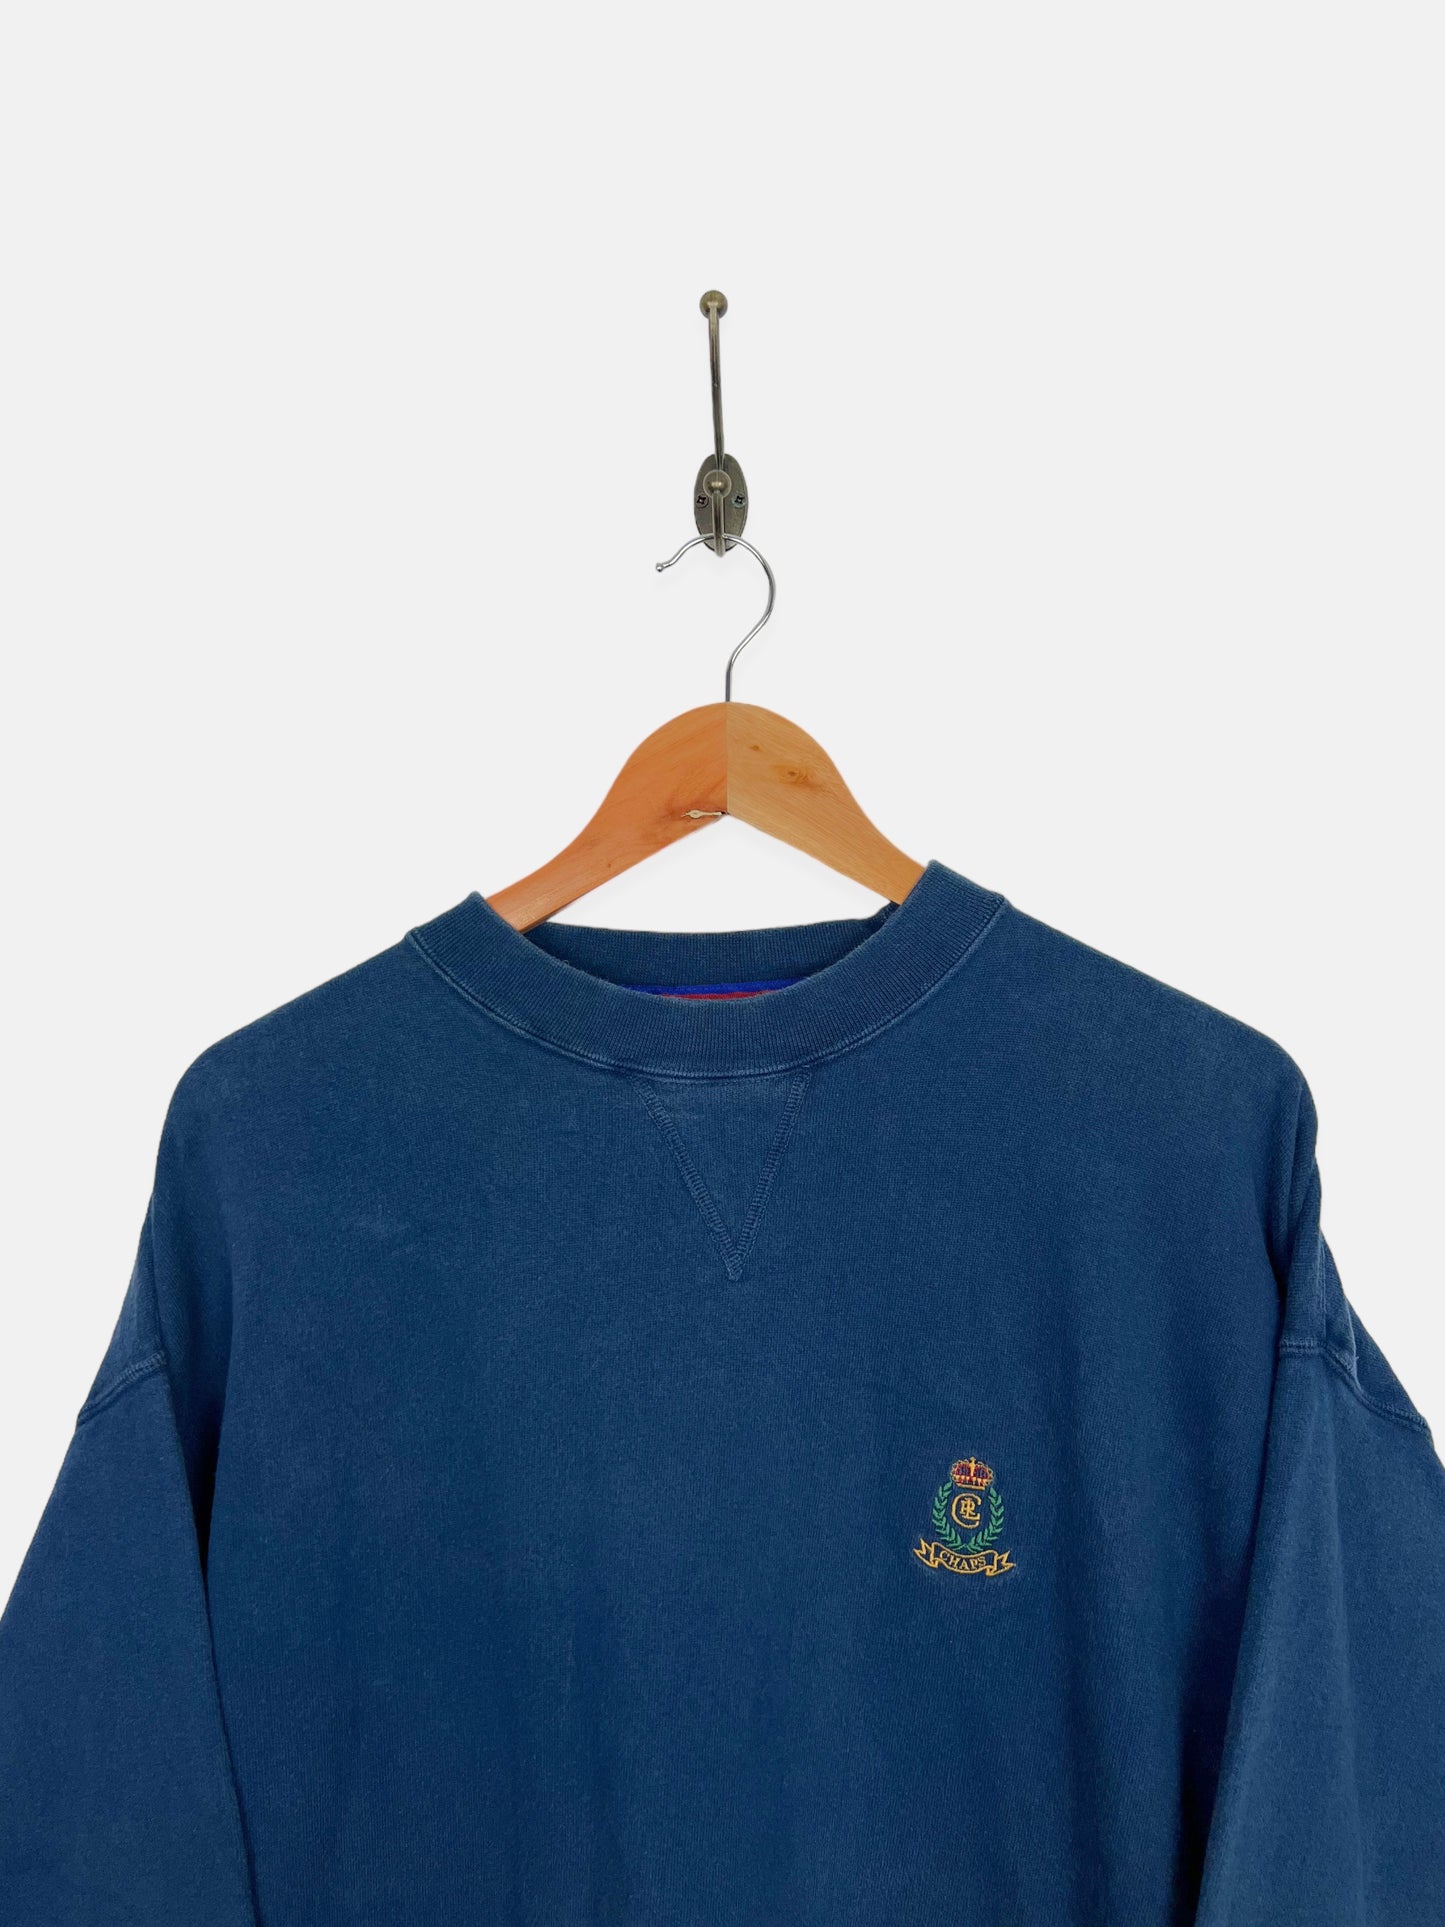 90's Chaps Ralph Lauren Embroidered Vintage Sweatshirt Size L